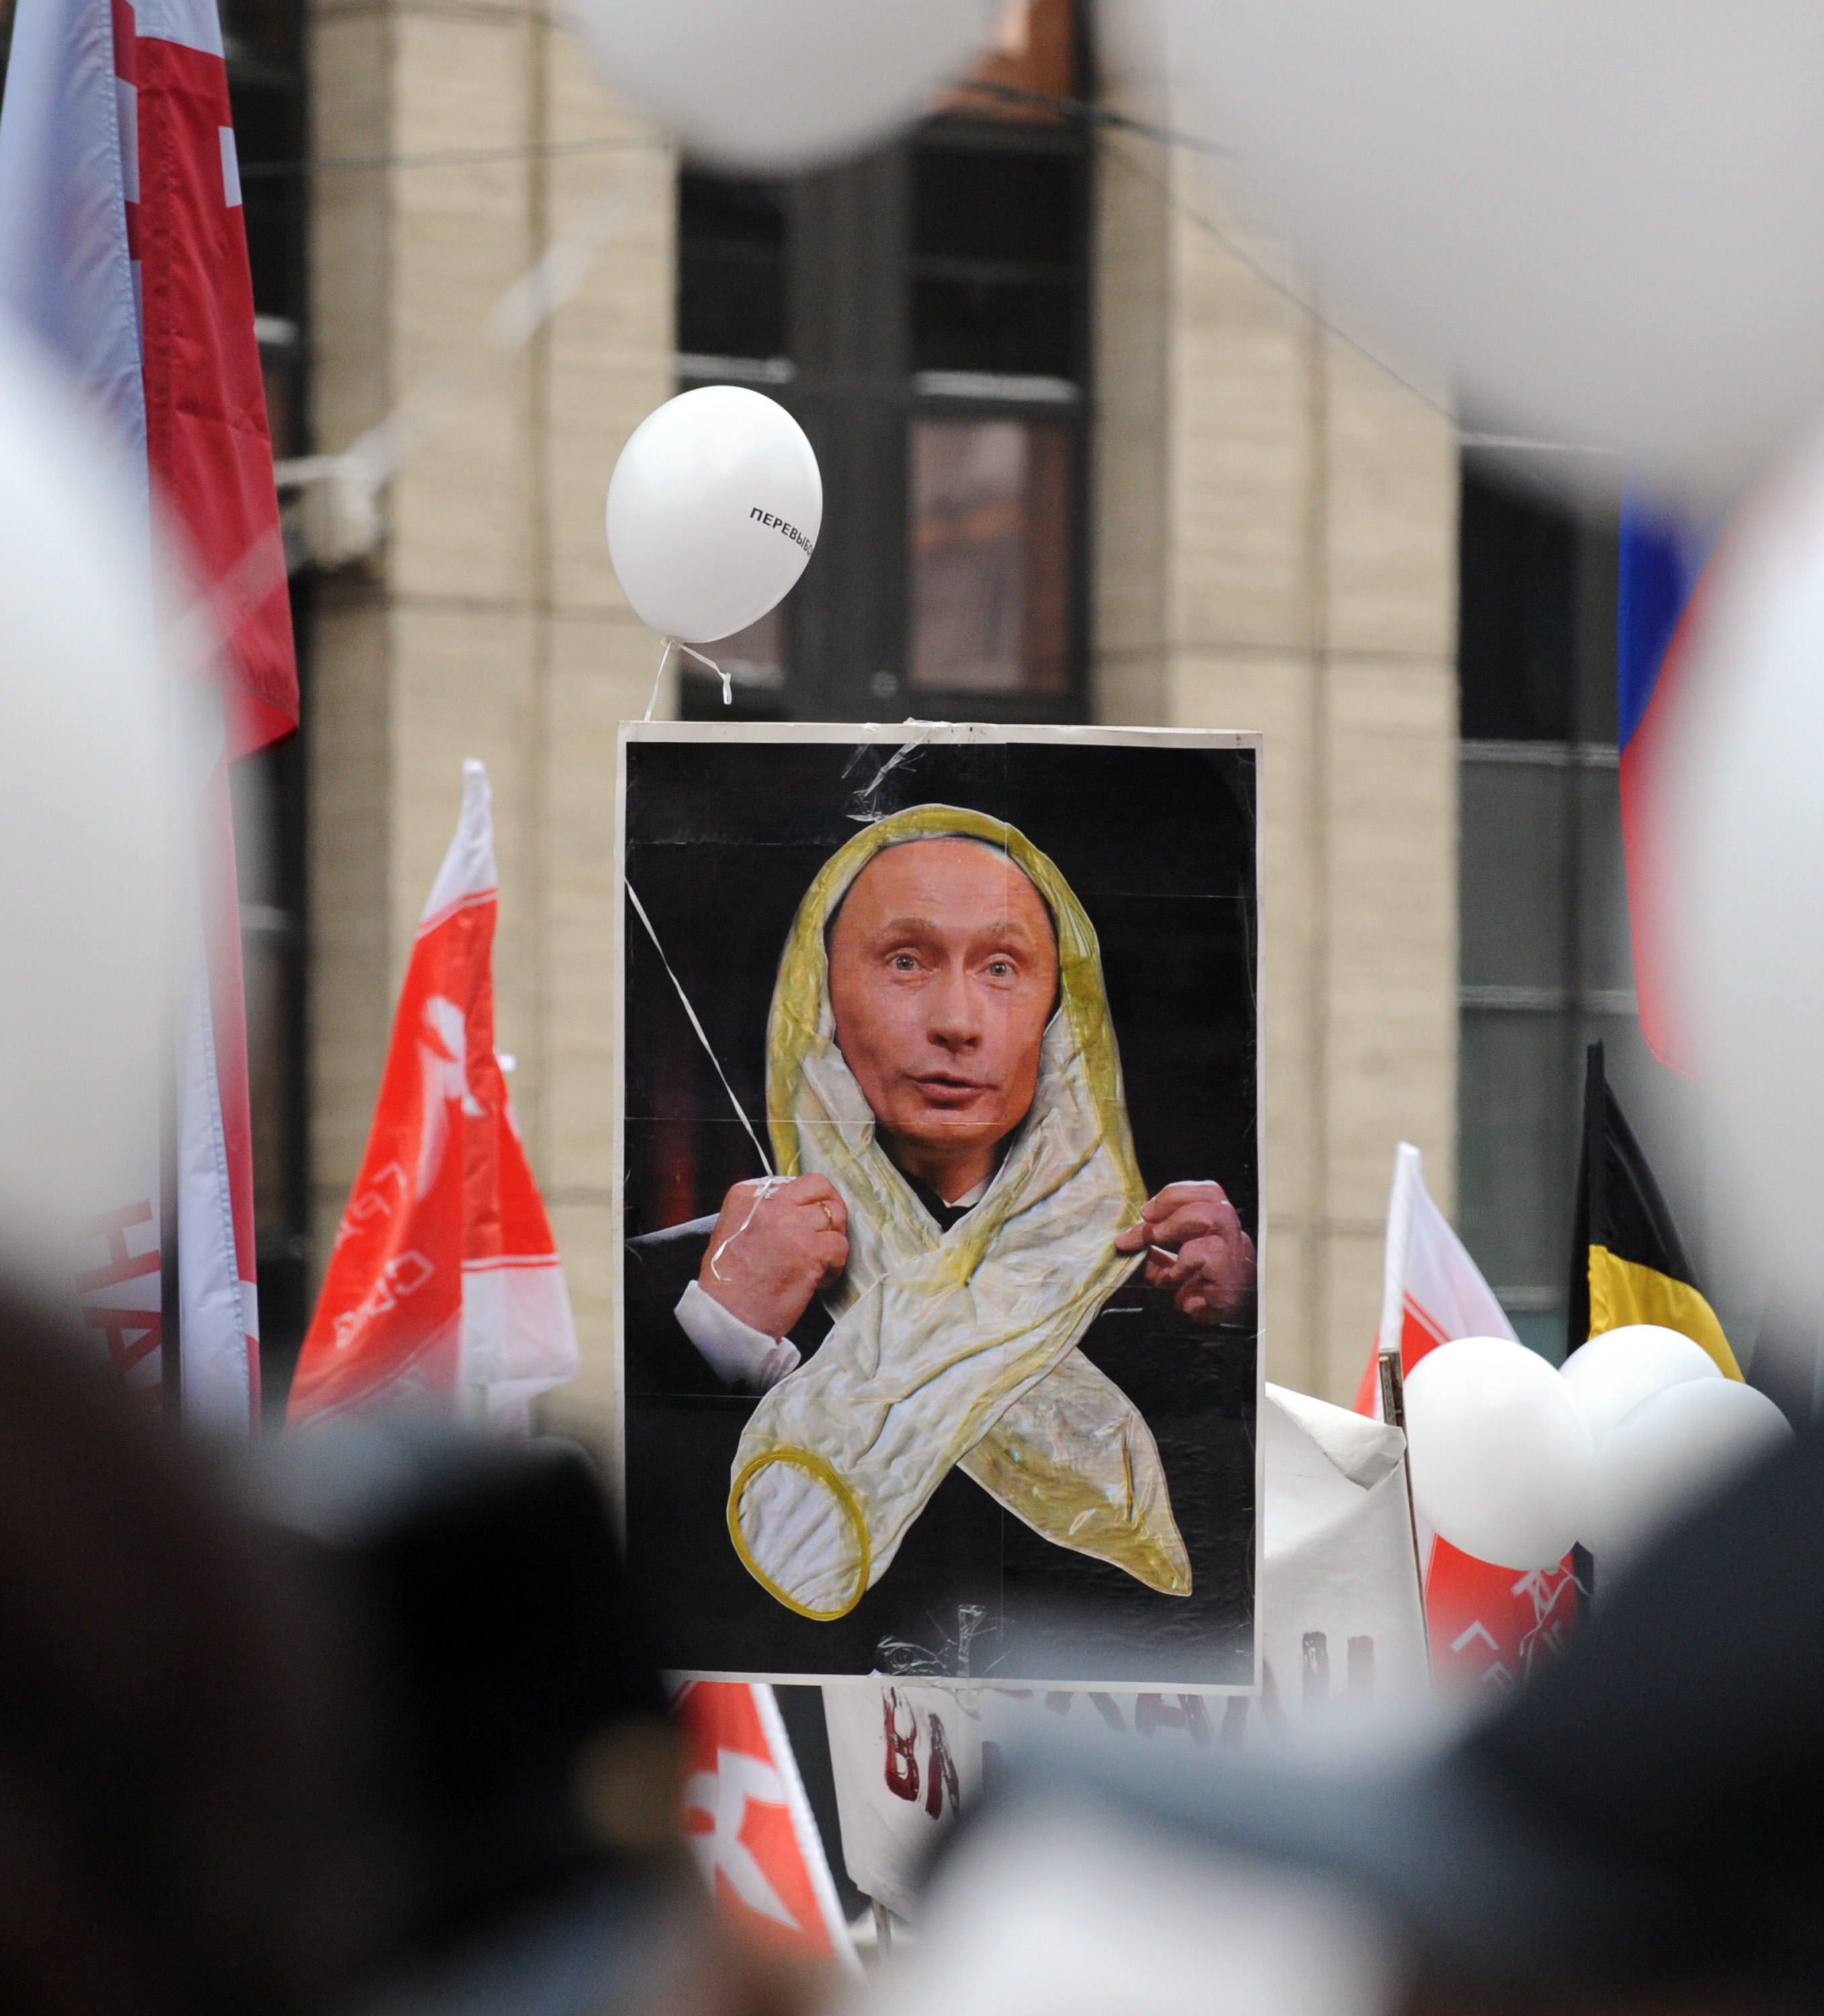 Putin congrega a sus seguidores para acallar las protestas de miles de opositores